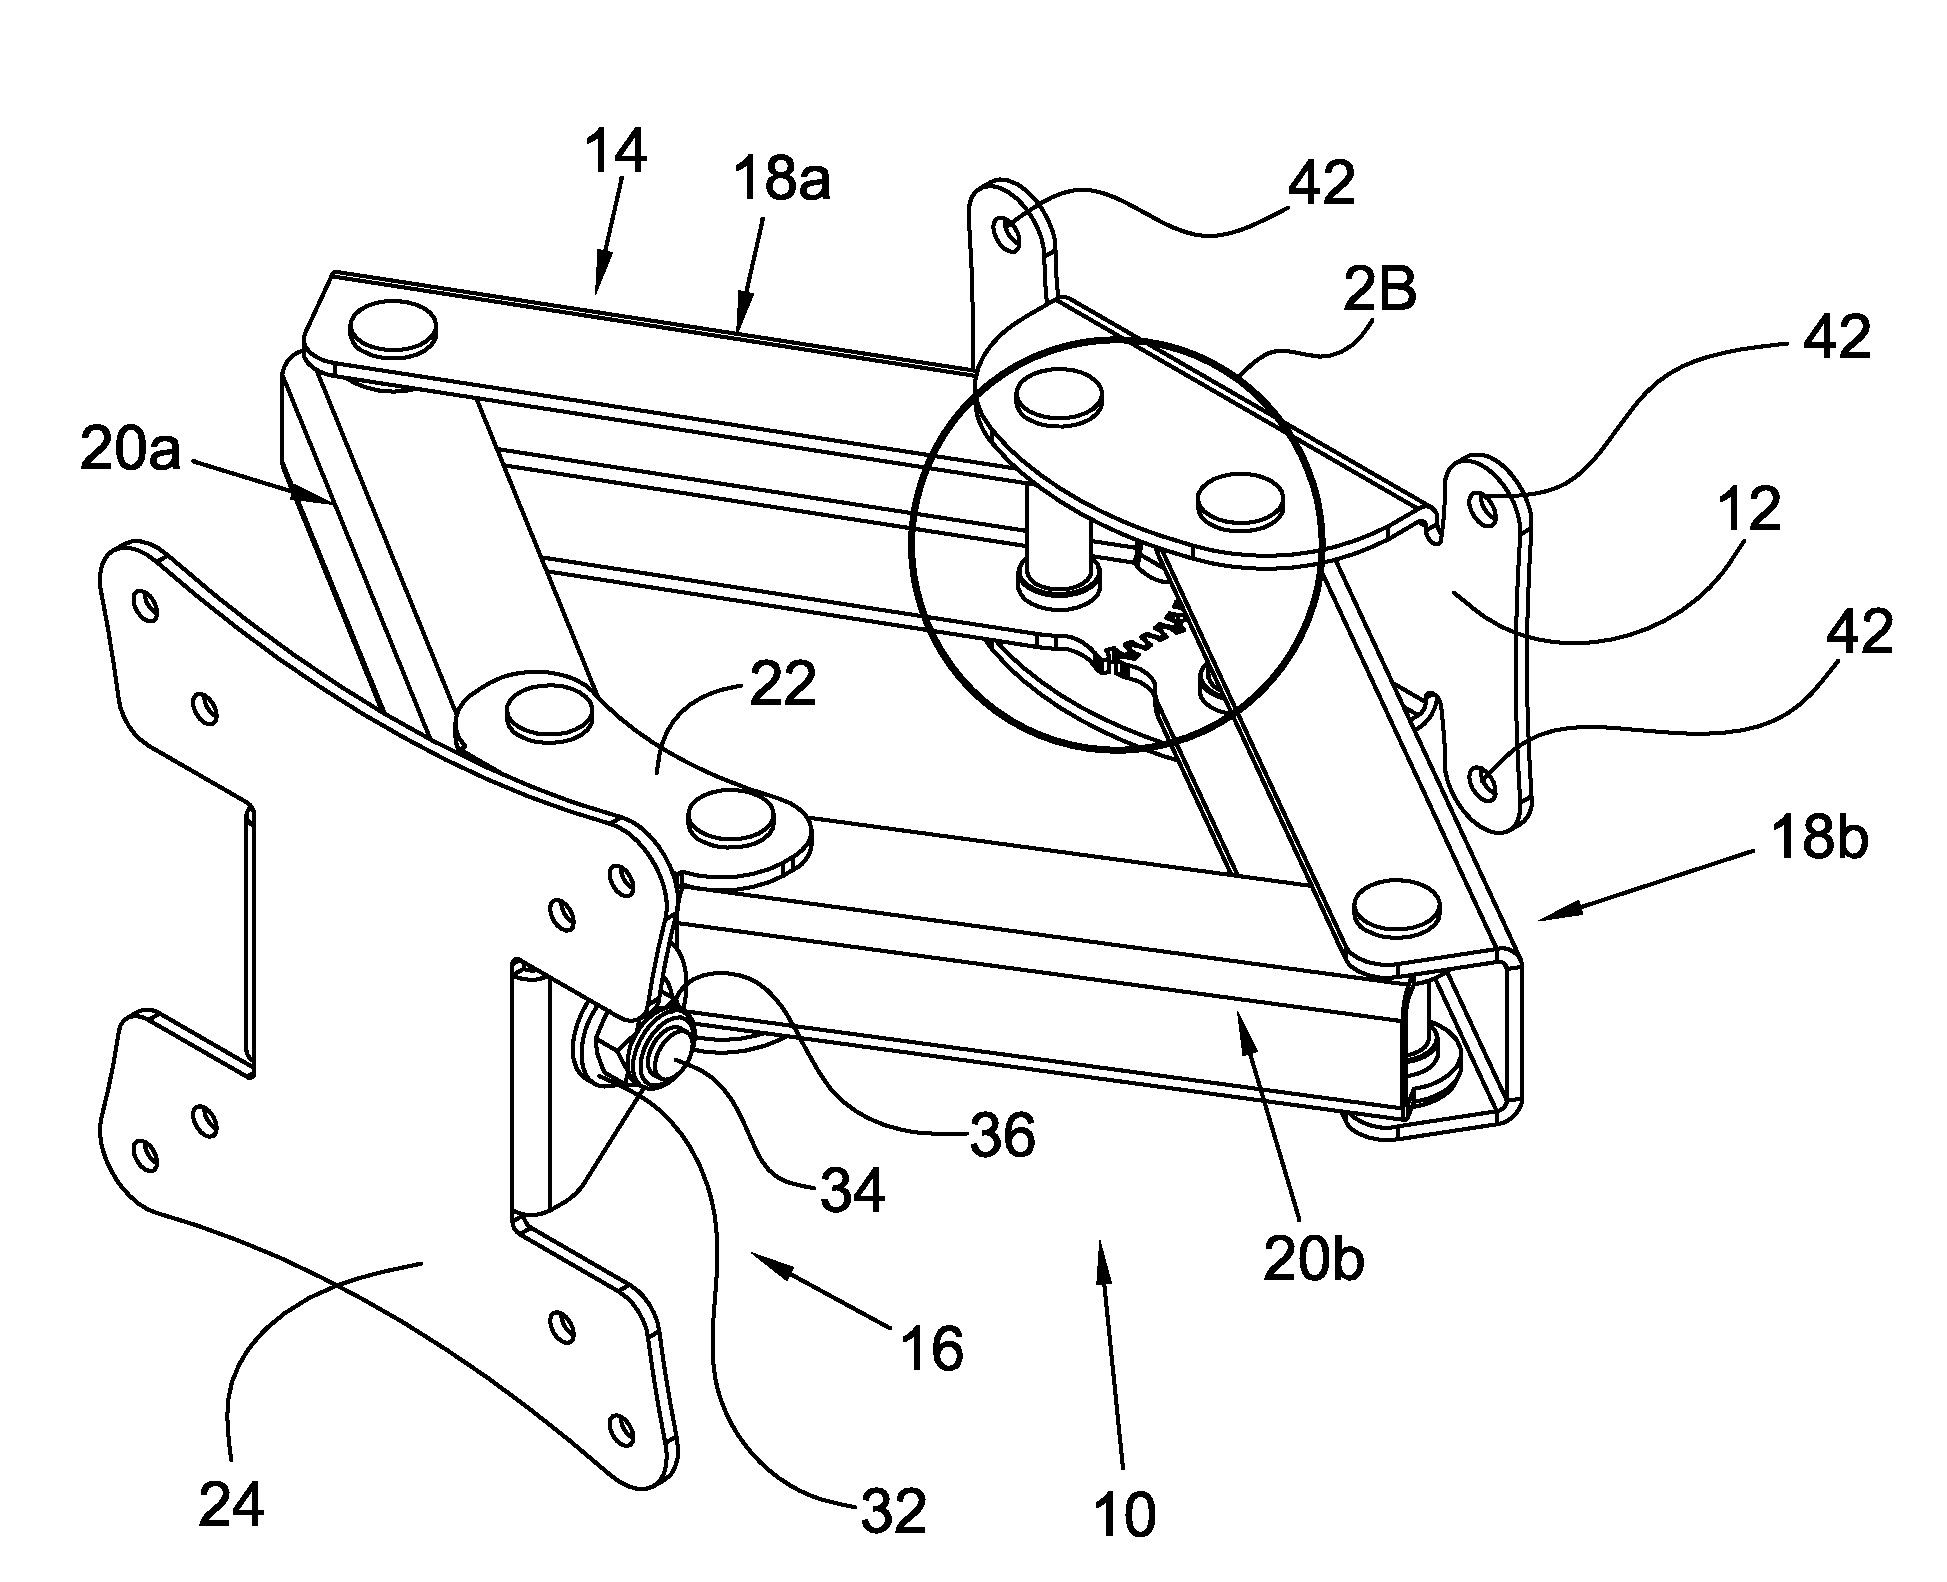 Scissor linkage mechanism